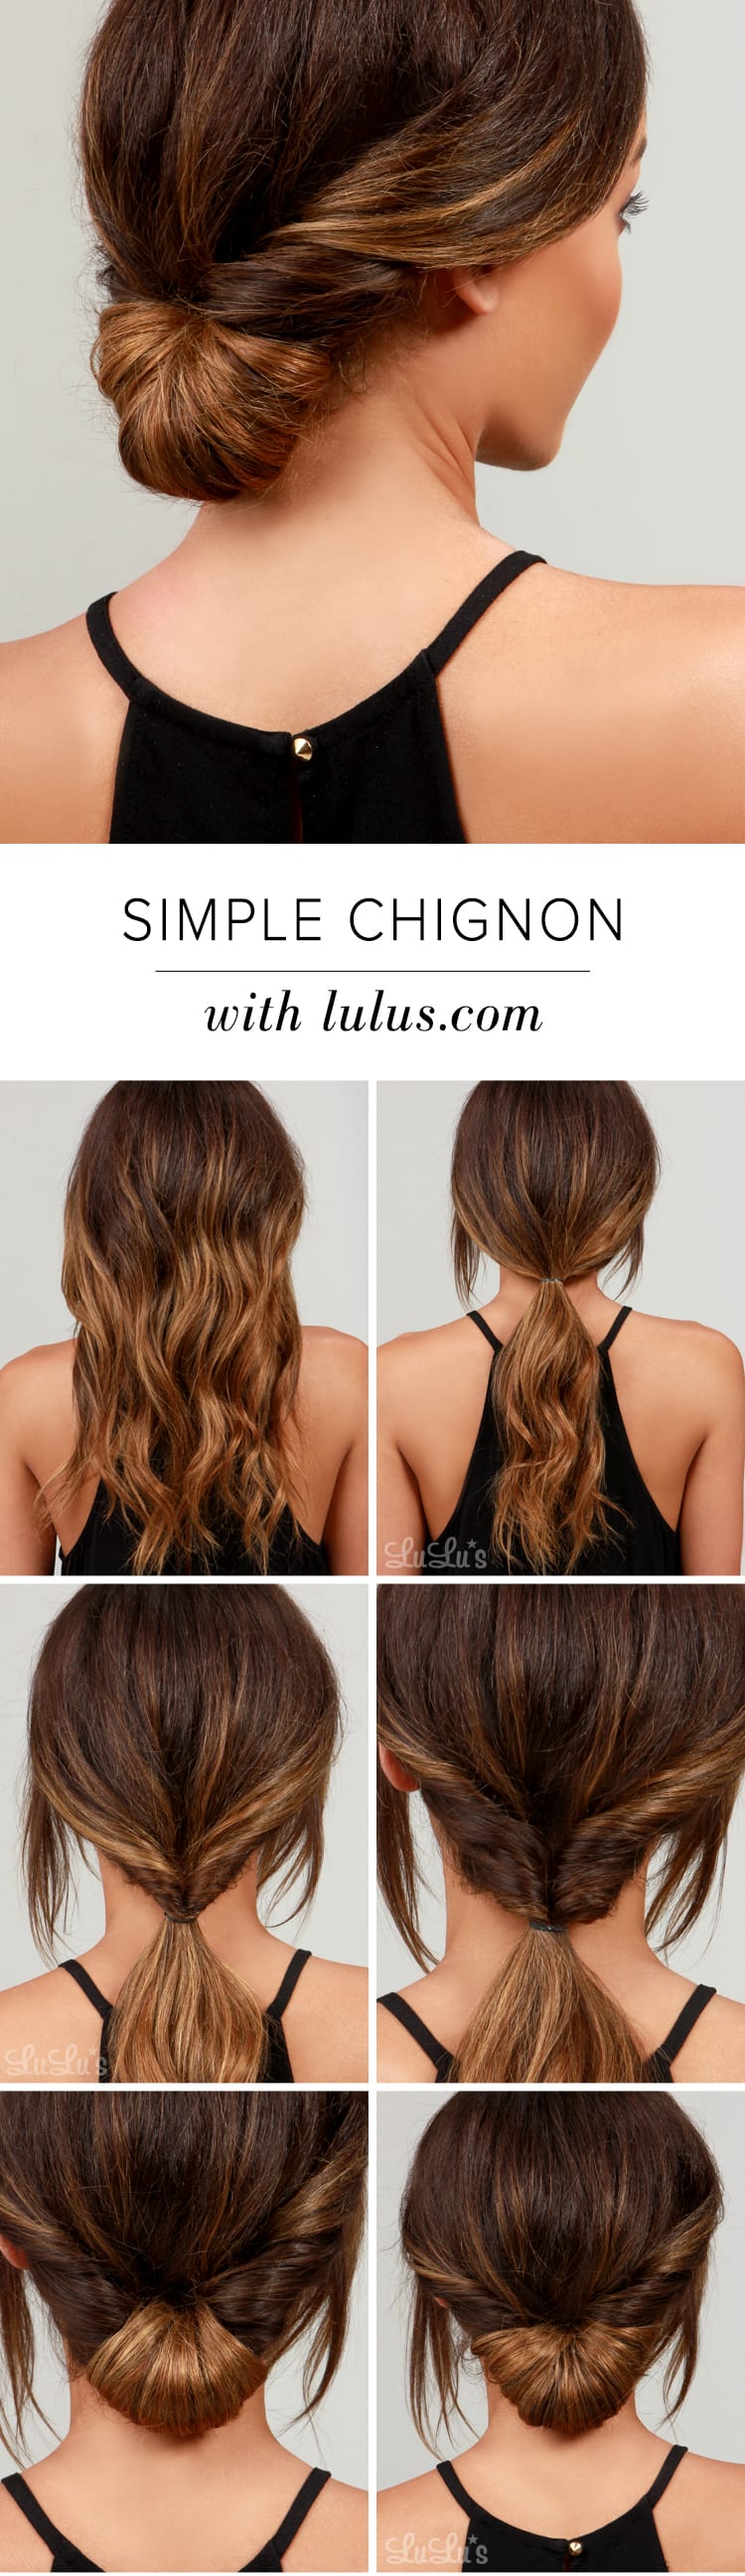 Lulus How-To: Simple Chignon Hair Tutorial  Fashion Blog